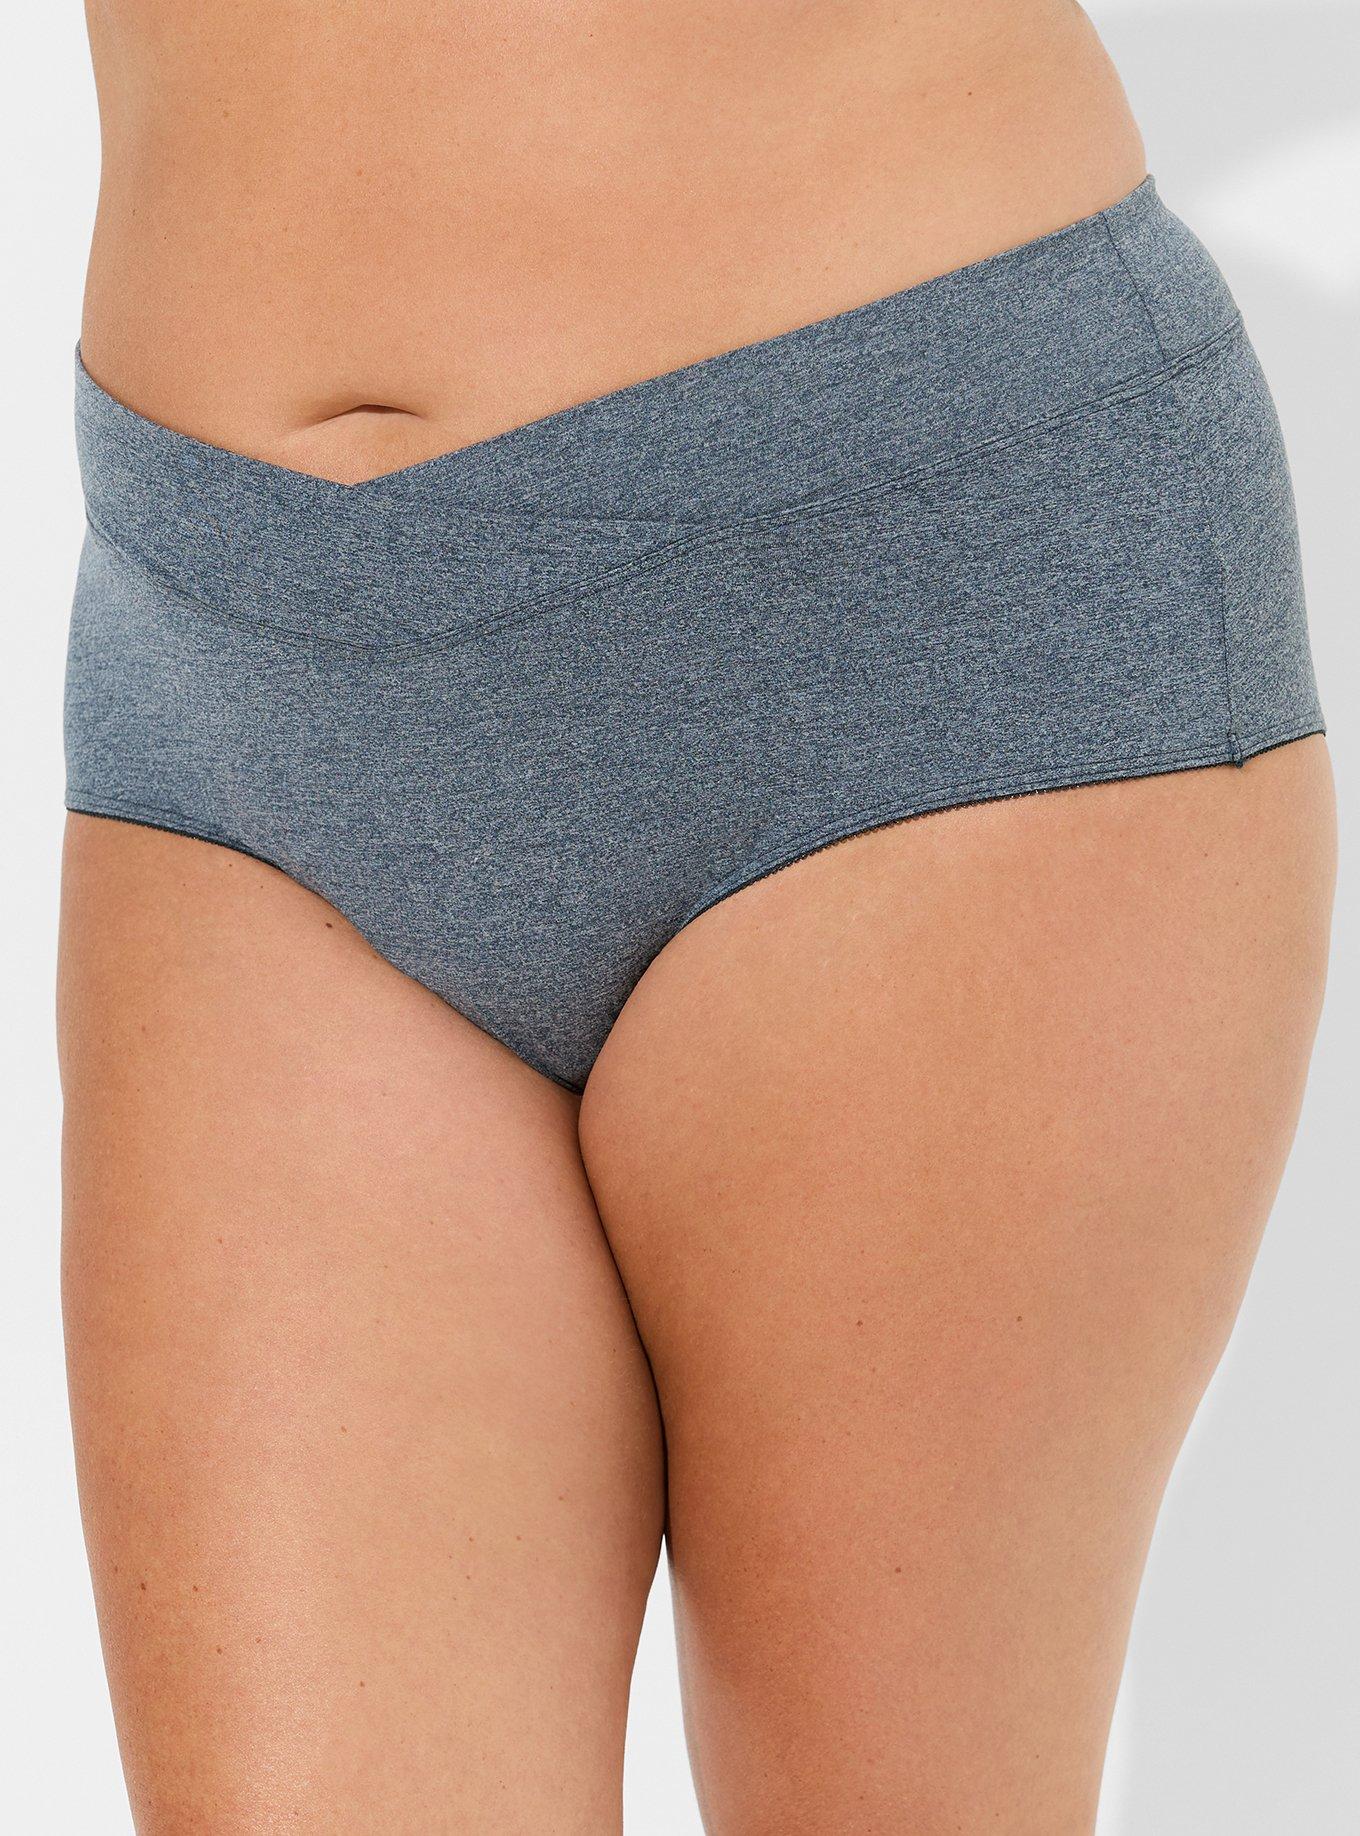 Beyondsoft Panties Normal Women Underwear (Regular & Plus Size) Cotton